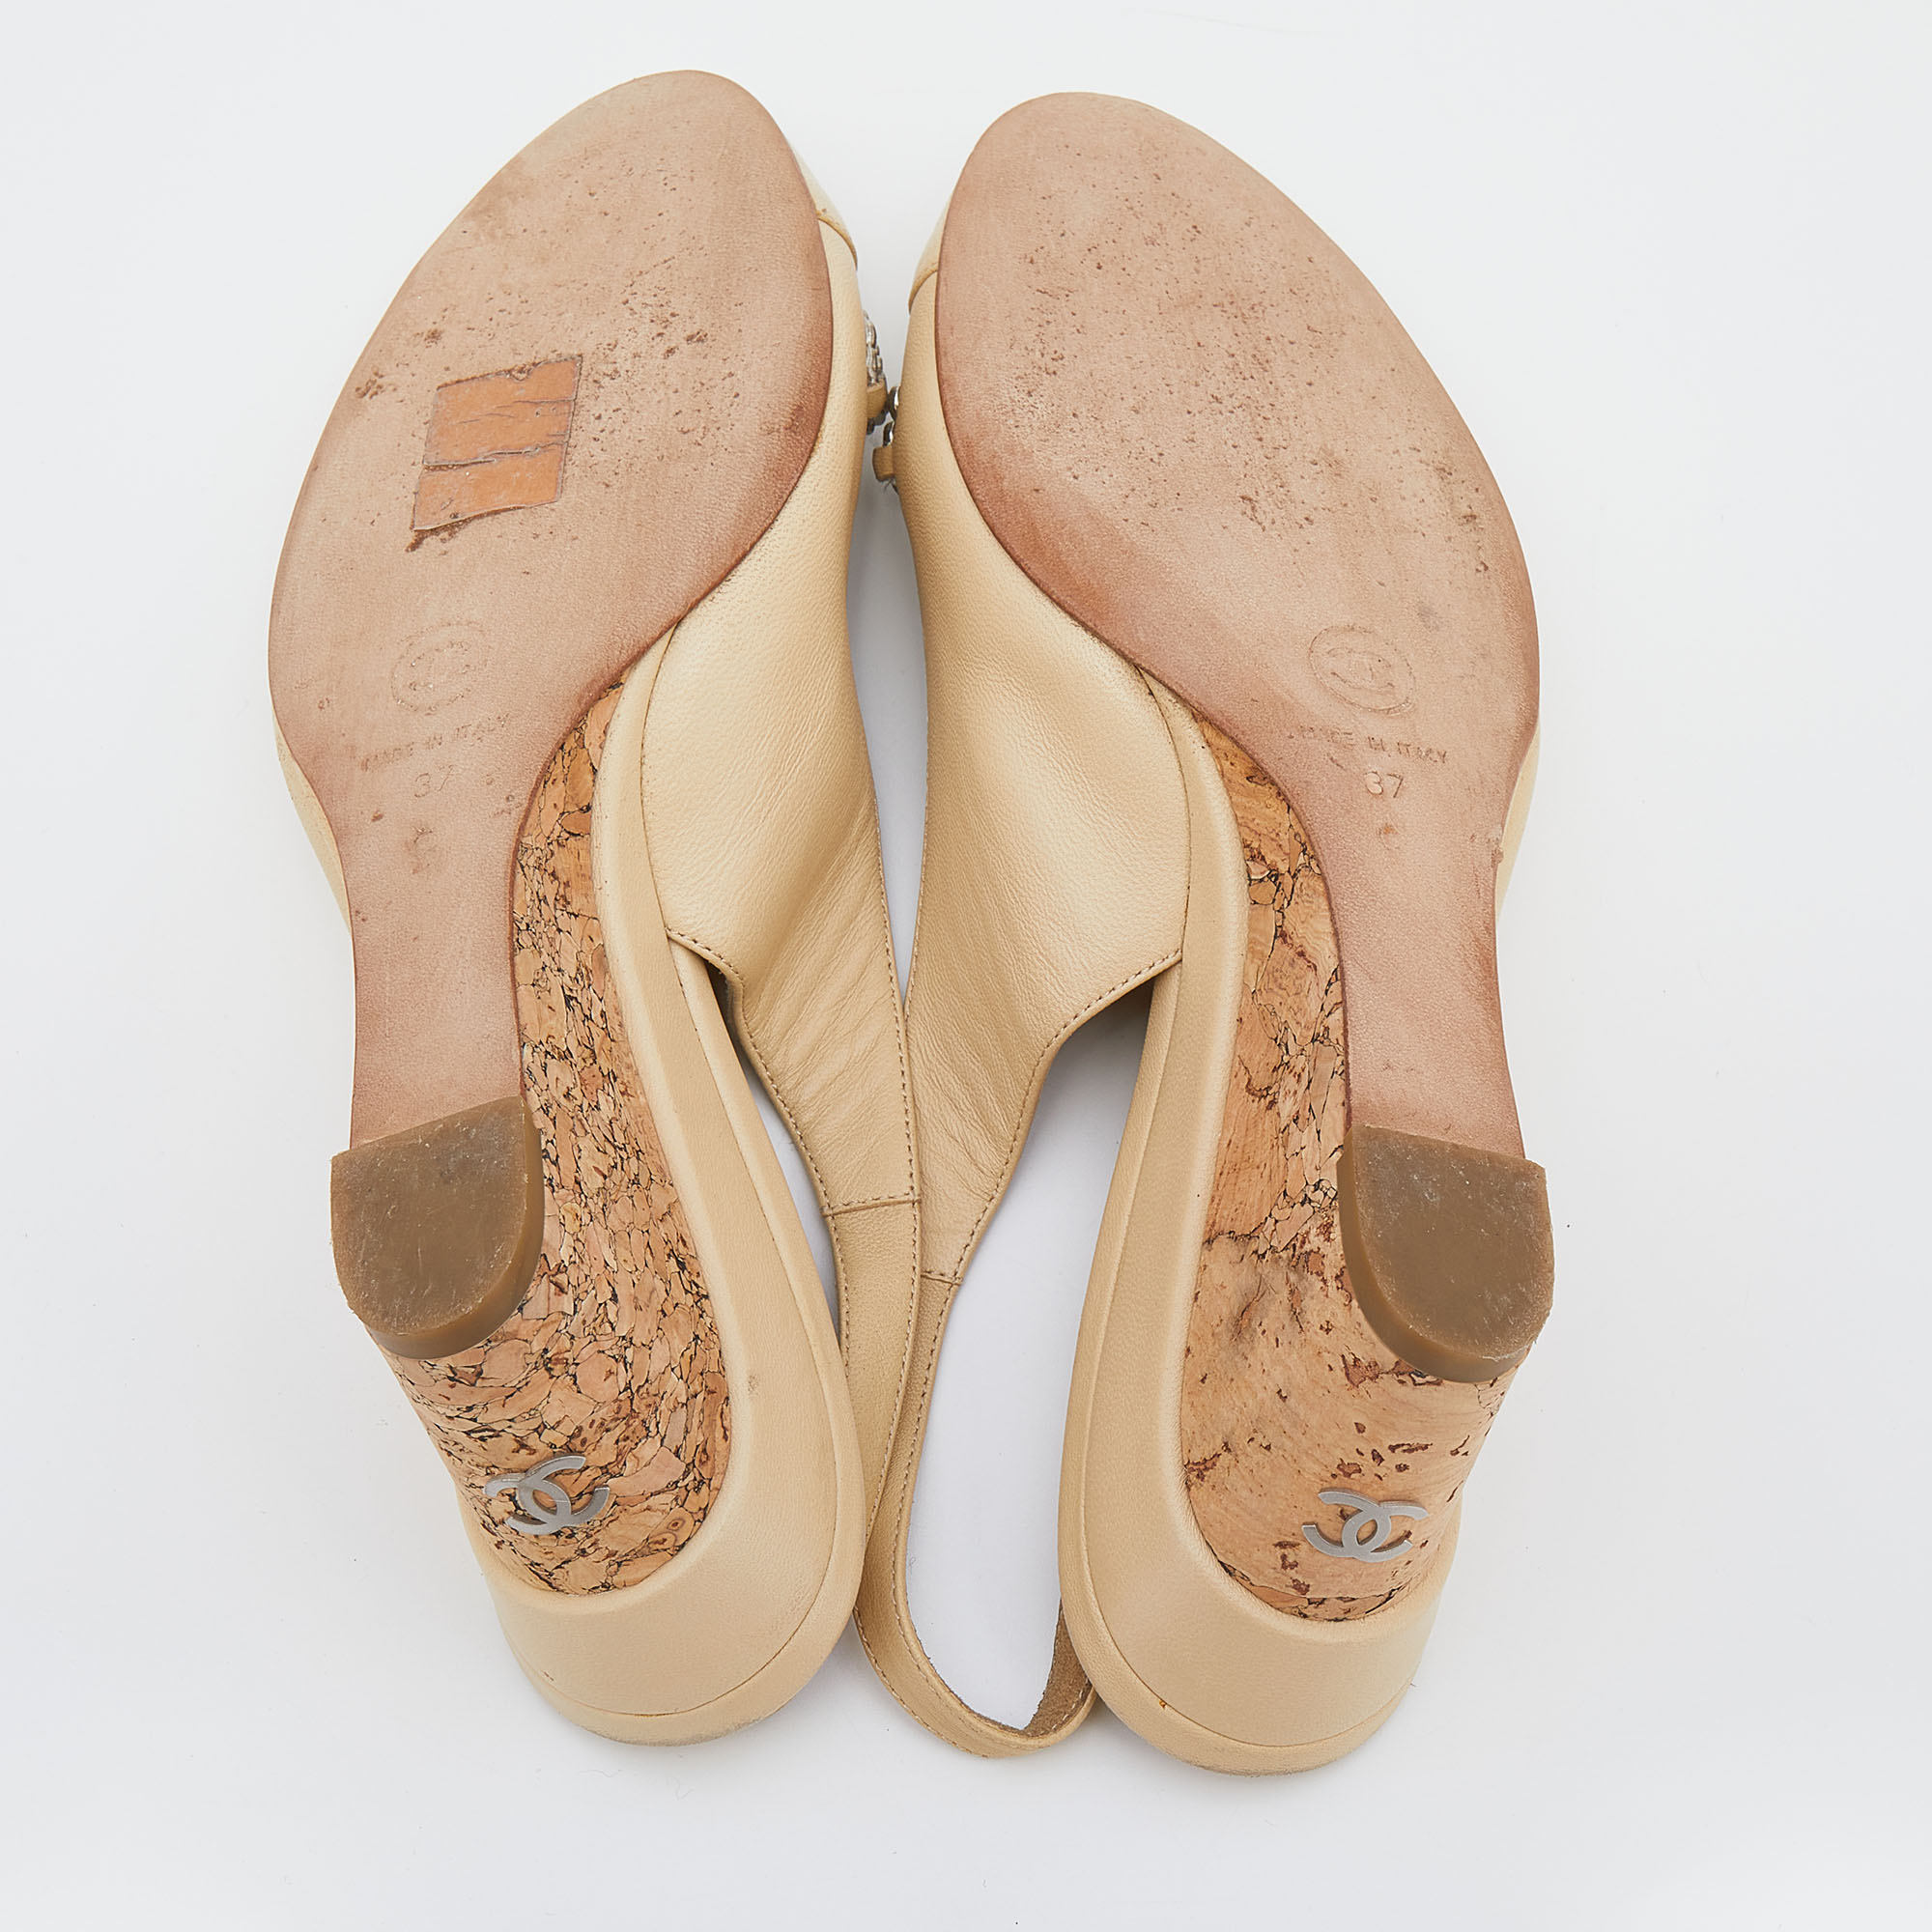 Chanel Cream Leather Cork Wedge Heel Slingback Sandals Size 37